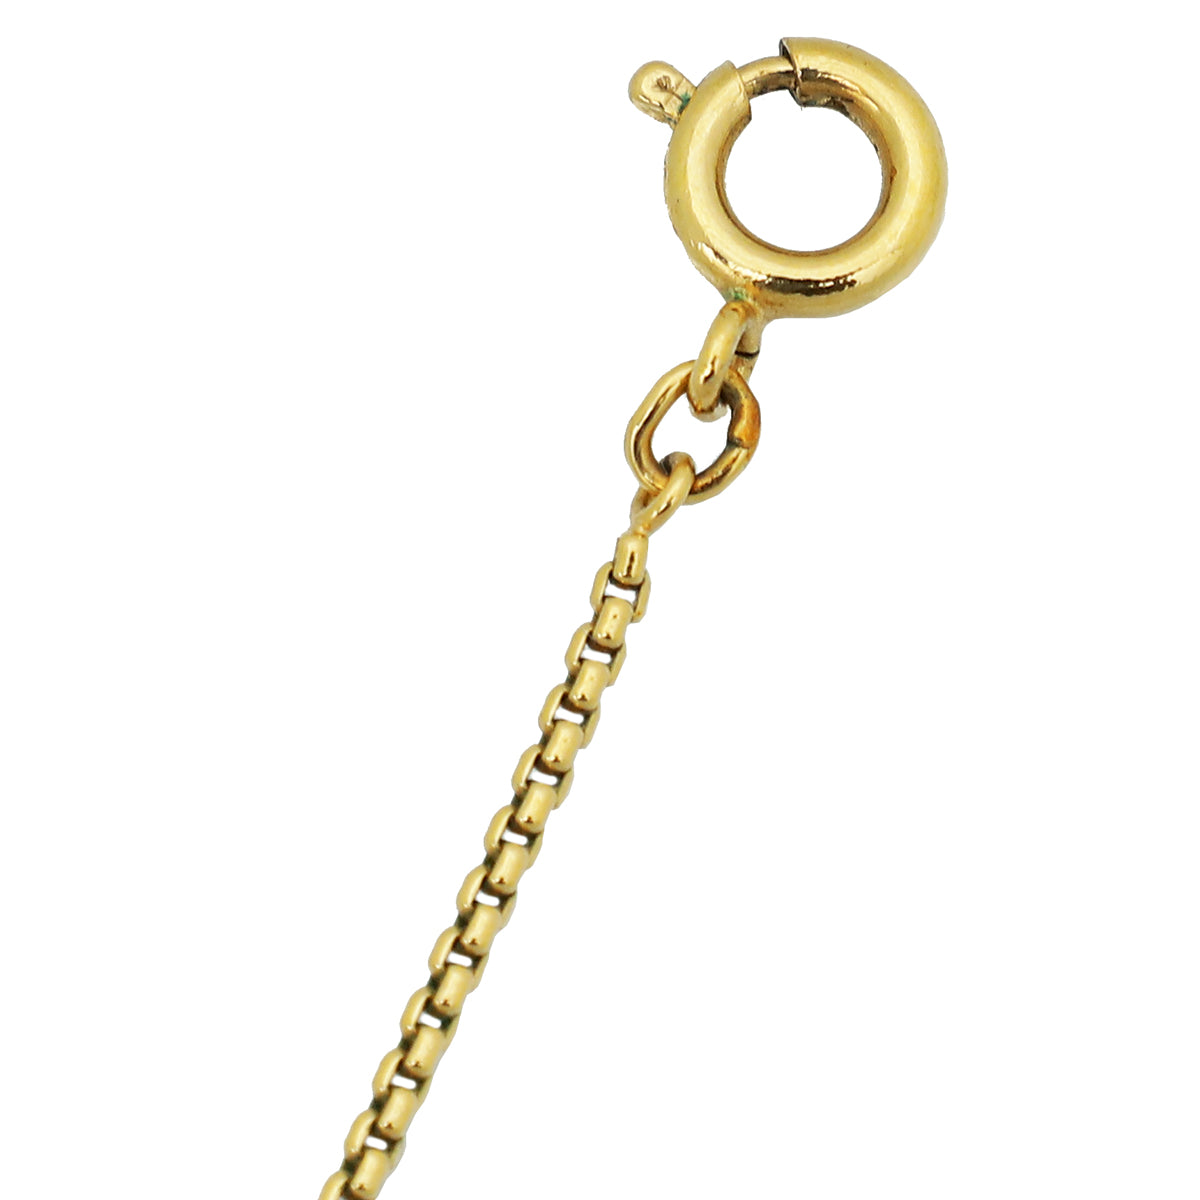 Christian Dior Gold Finish Logo Crystal Drop Pendant Necklace